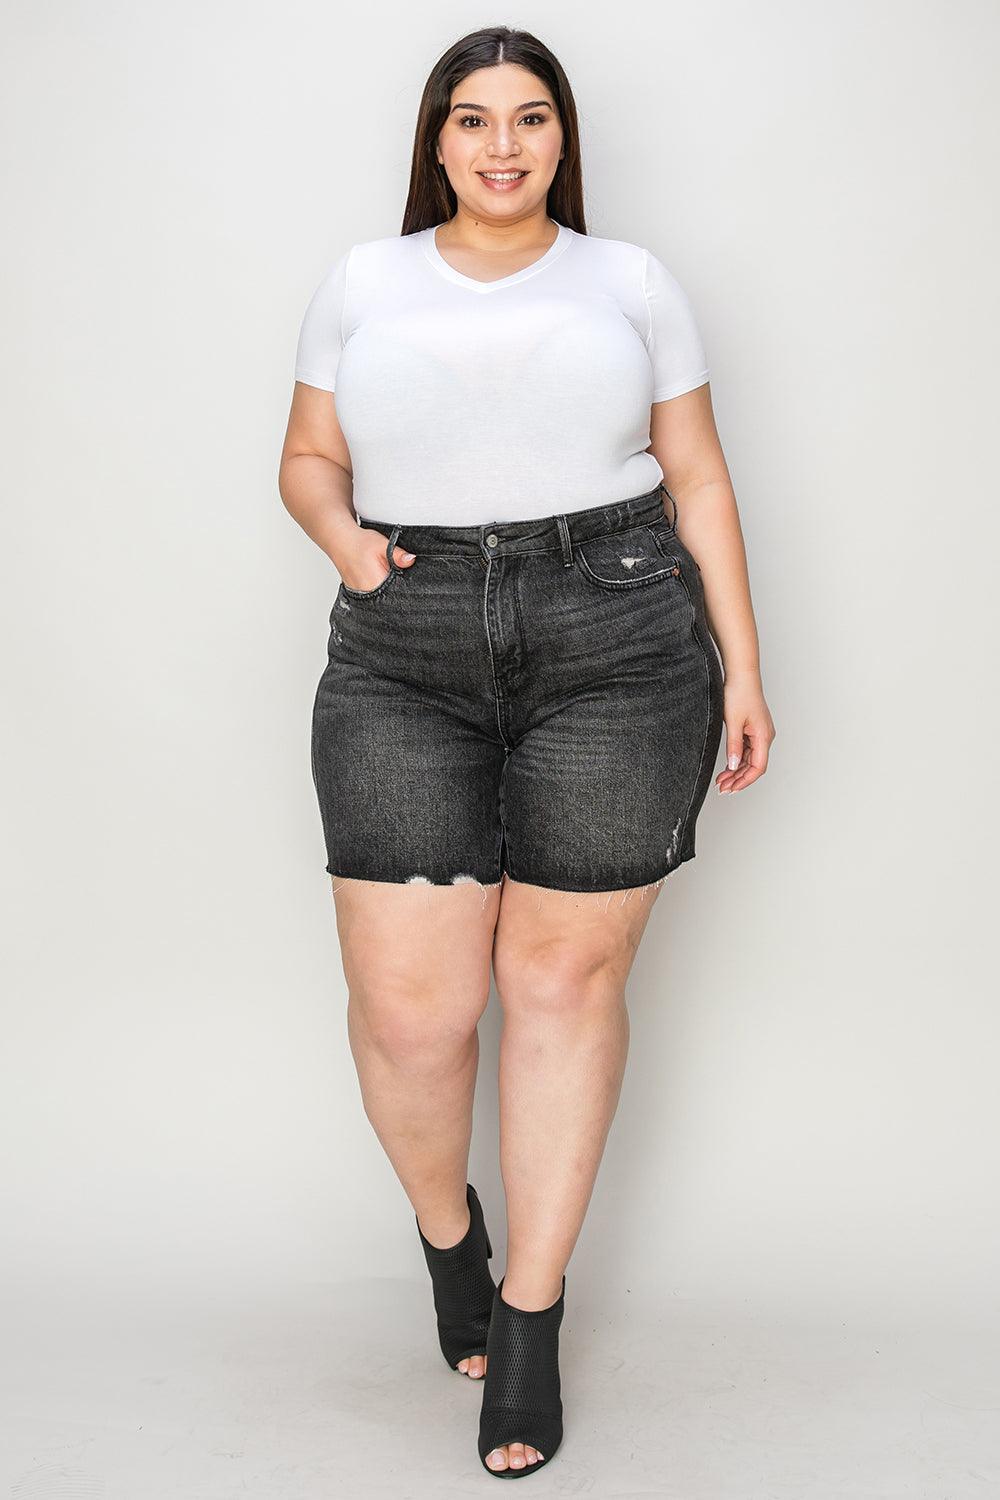 Judy Blue Full Size High Waist Tummy Control Denim Shorts - Anchored Feather Boutique